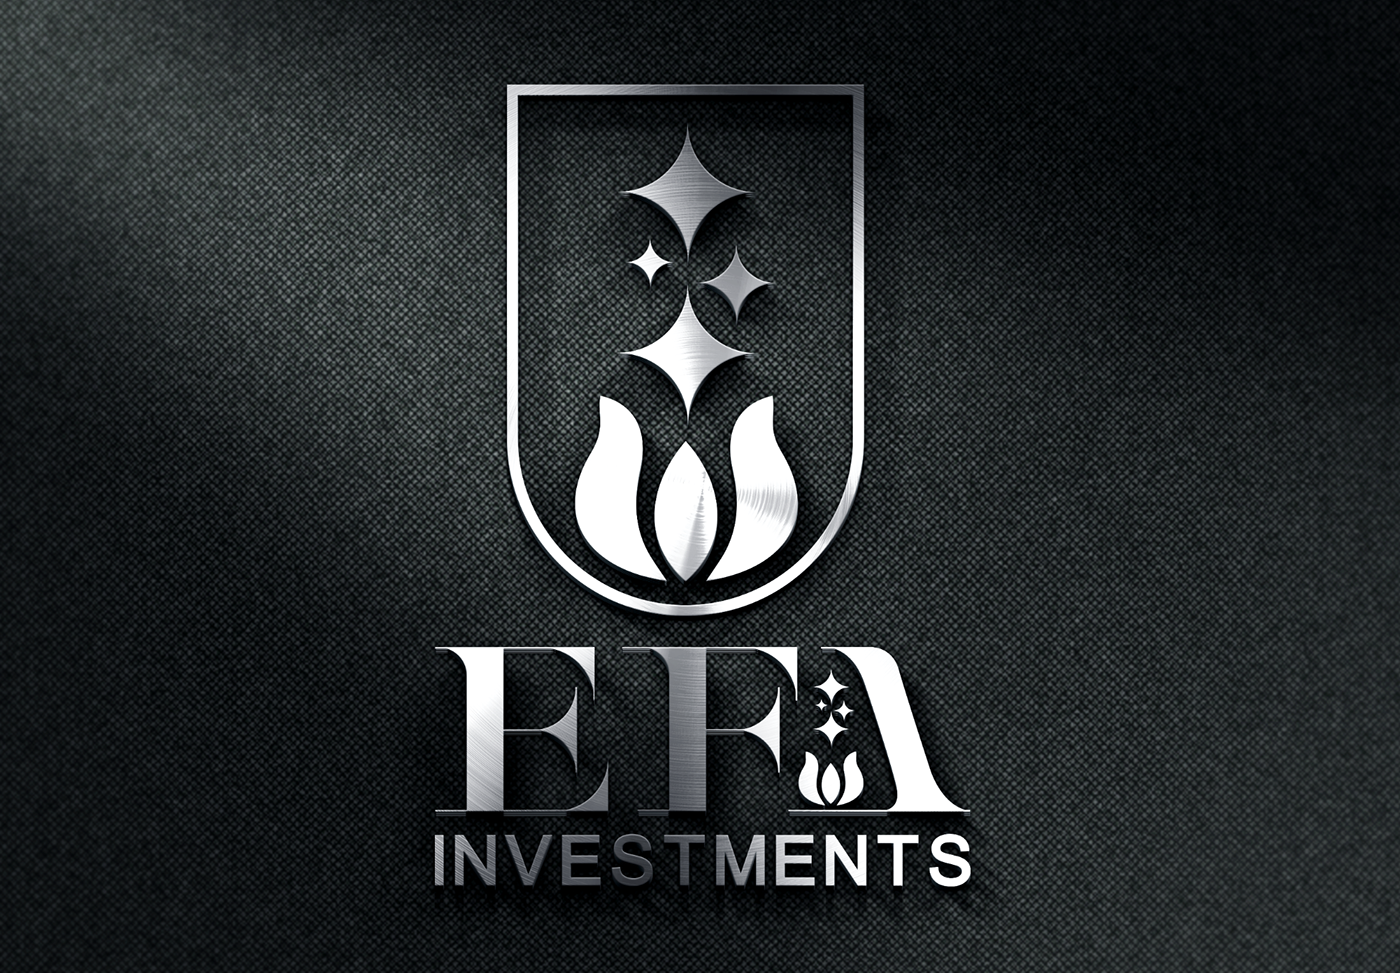 logos branding  advertisement business mockups graphic design  efa Flowers middle east logo Original